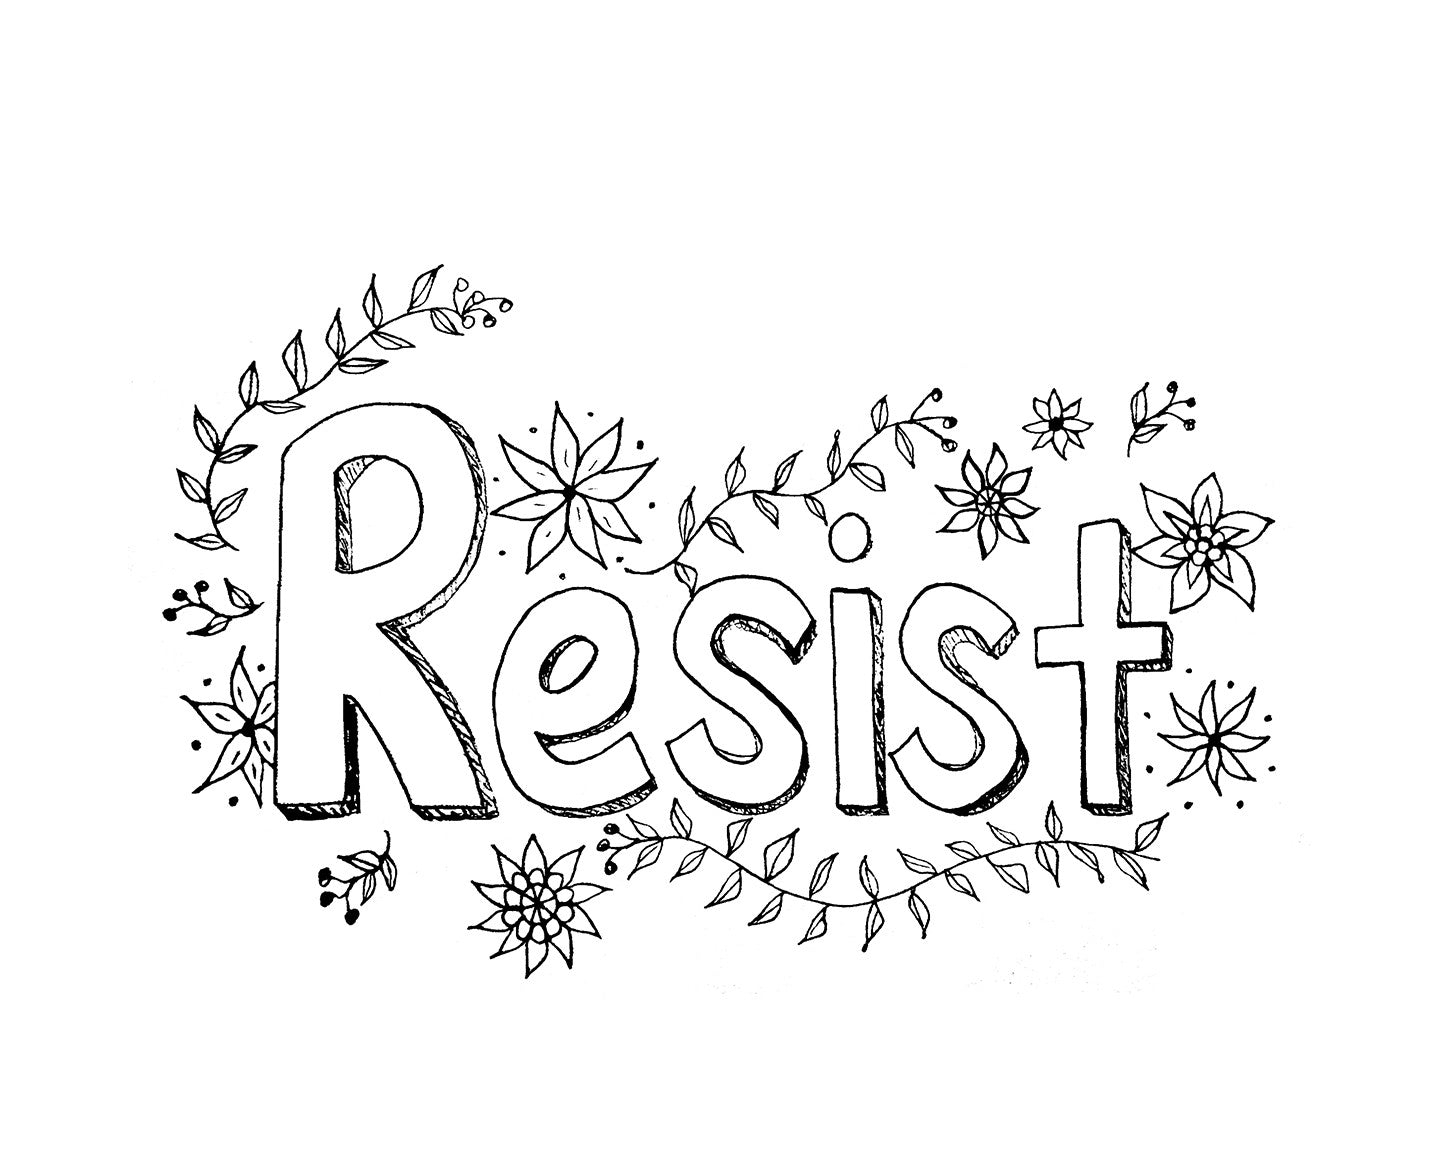 Doodle 54/365 - Resist